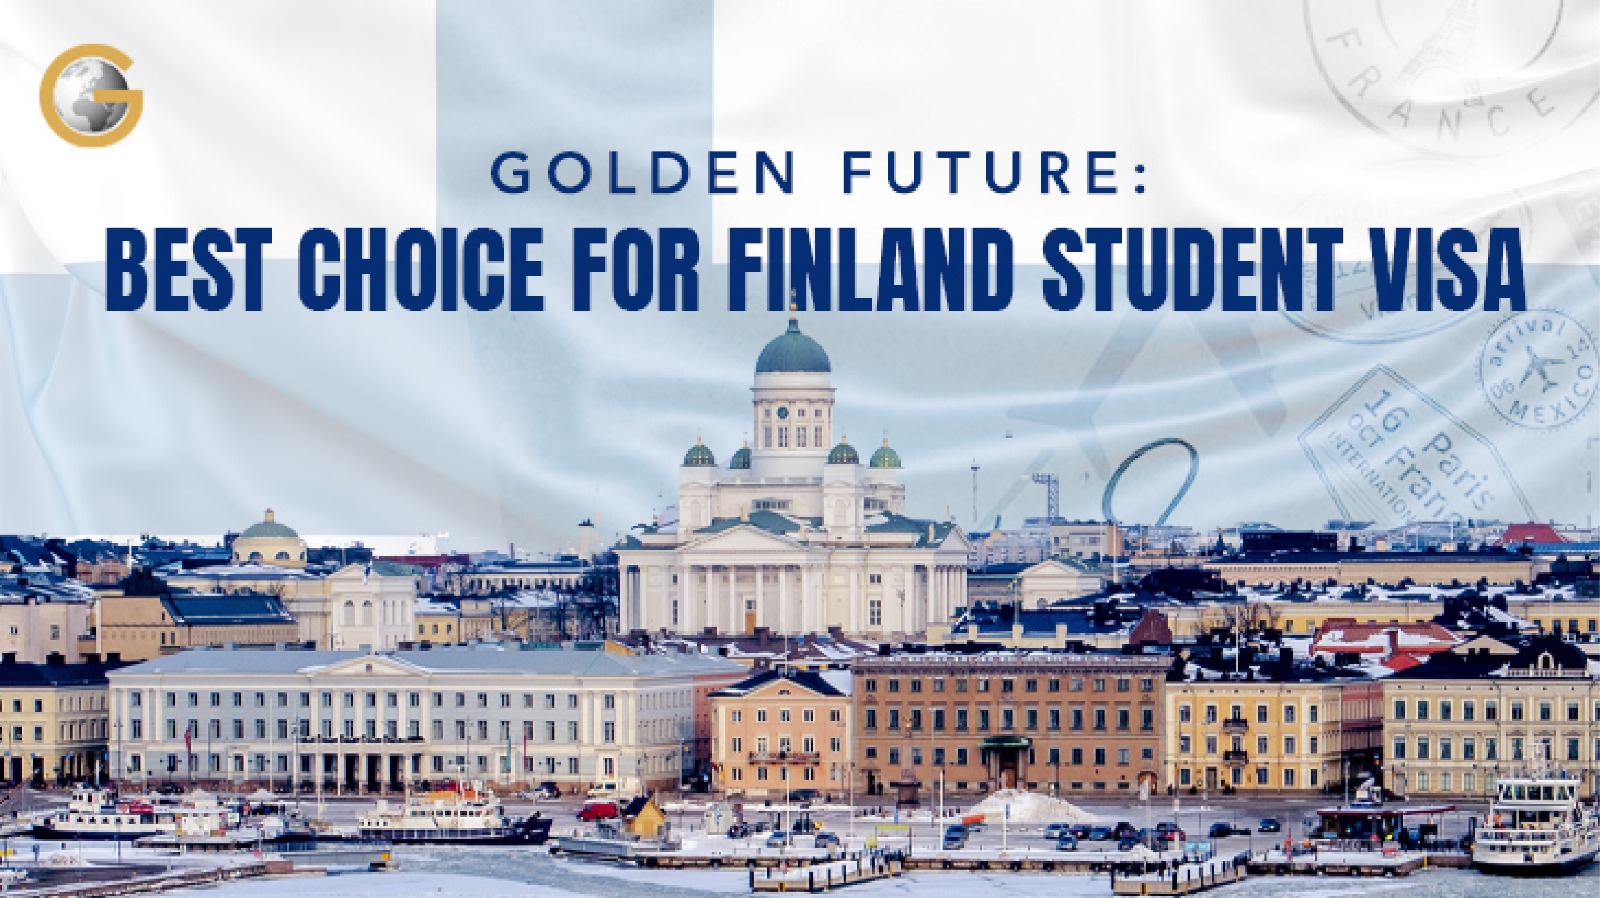 Finland student visa, Finland student visa consultants, Student Visa for Finland